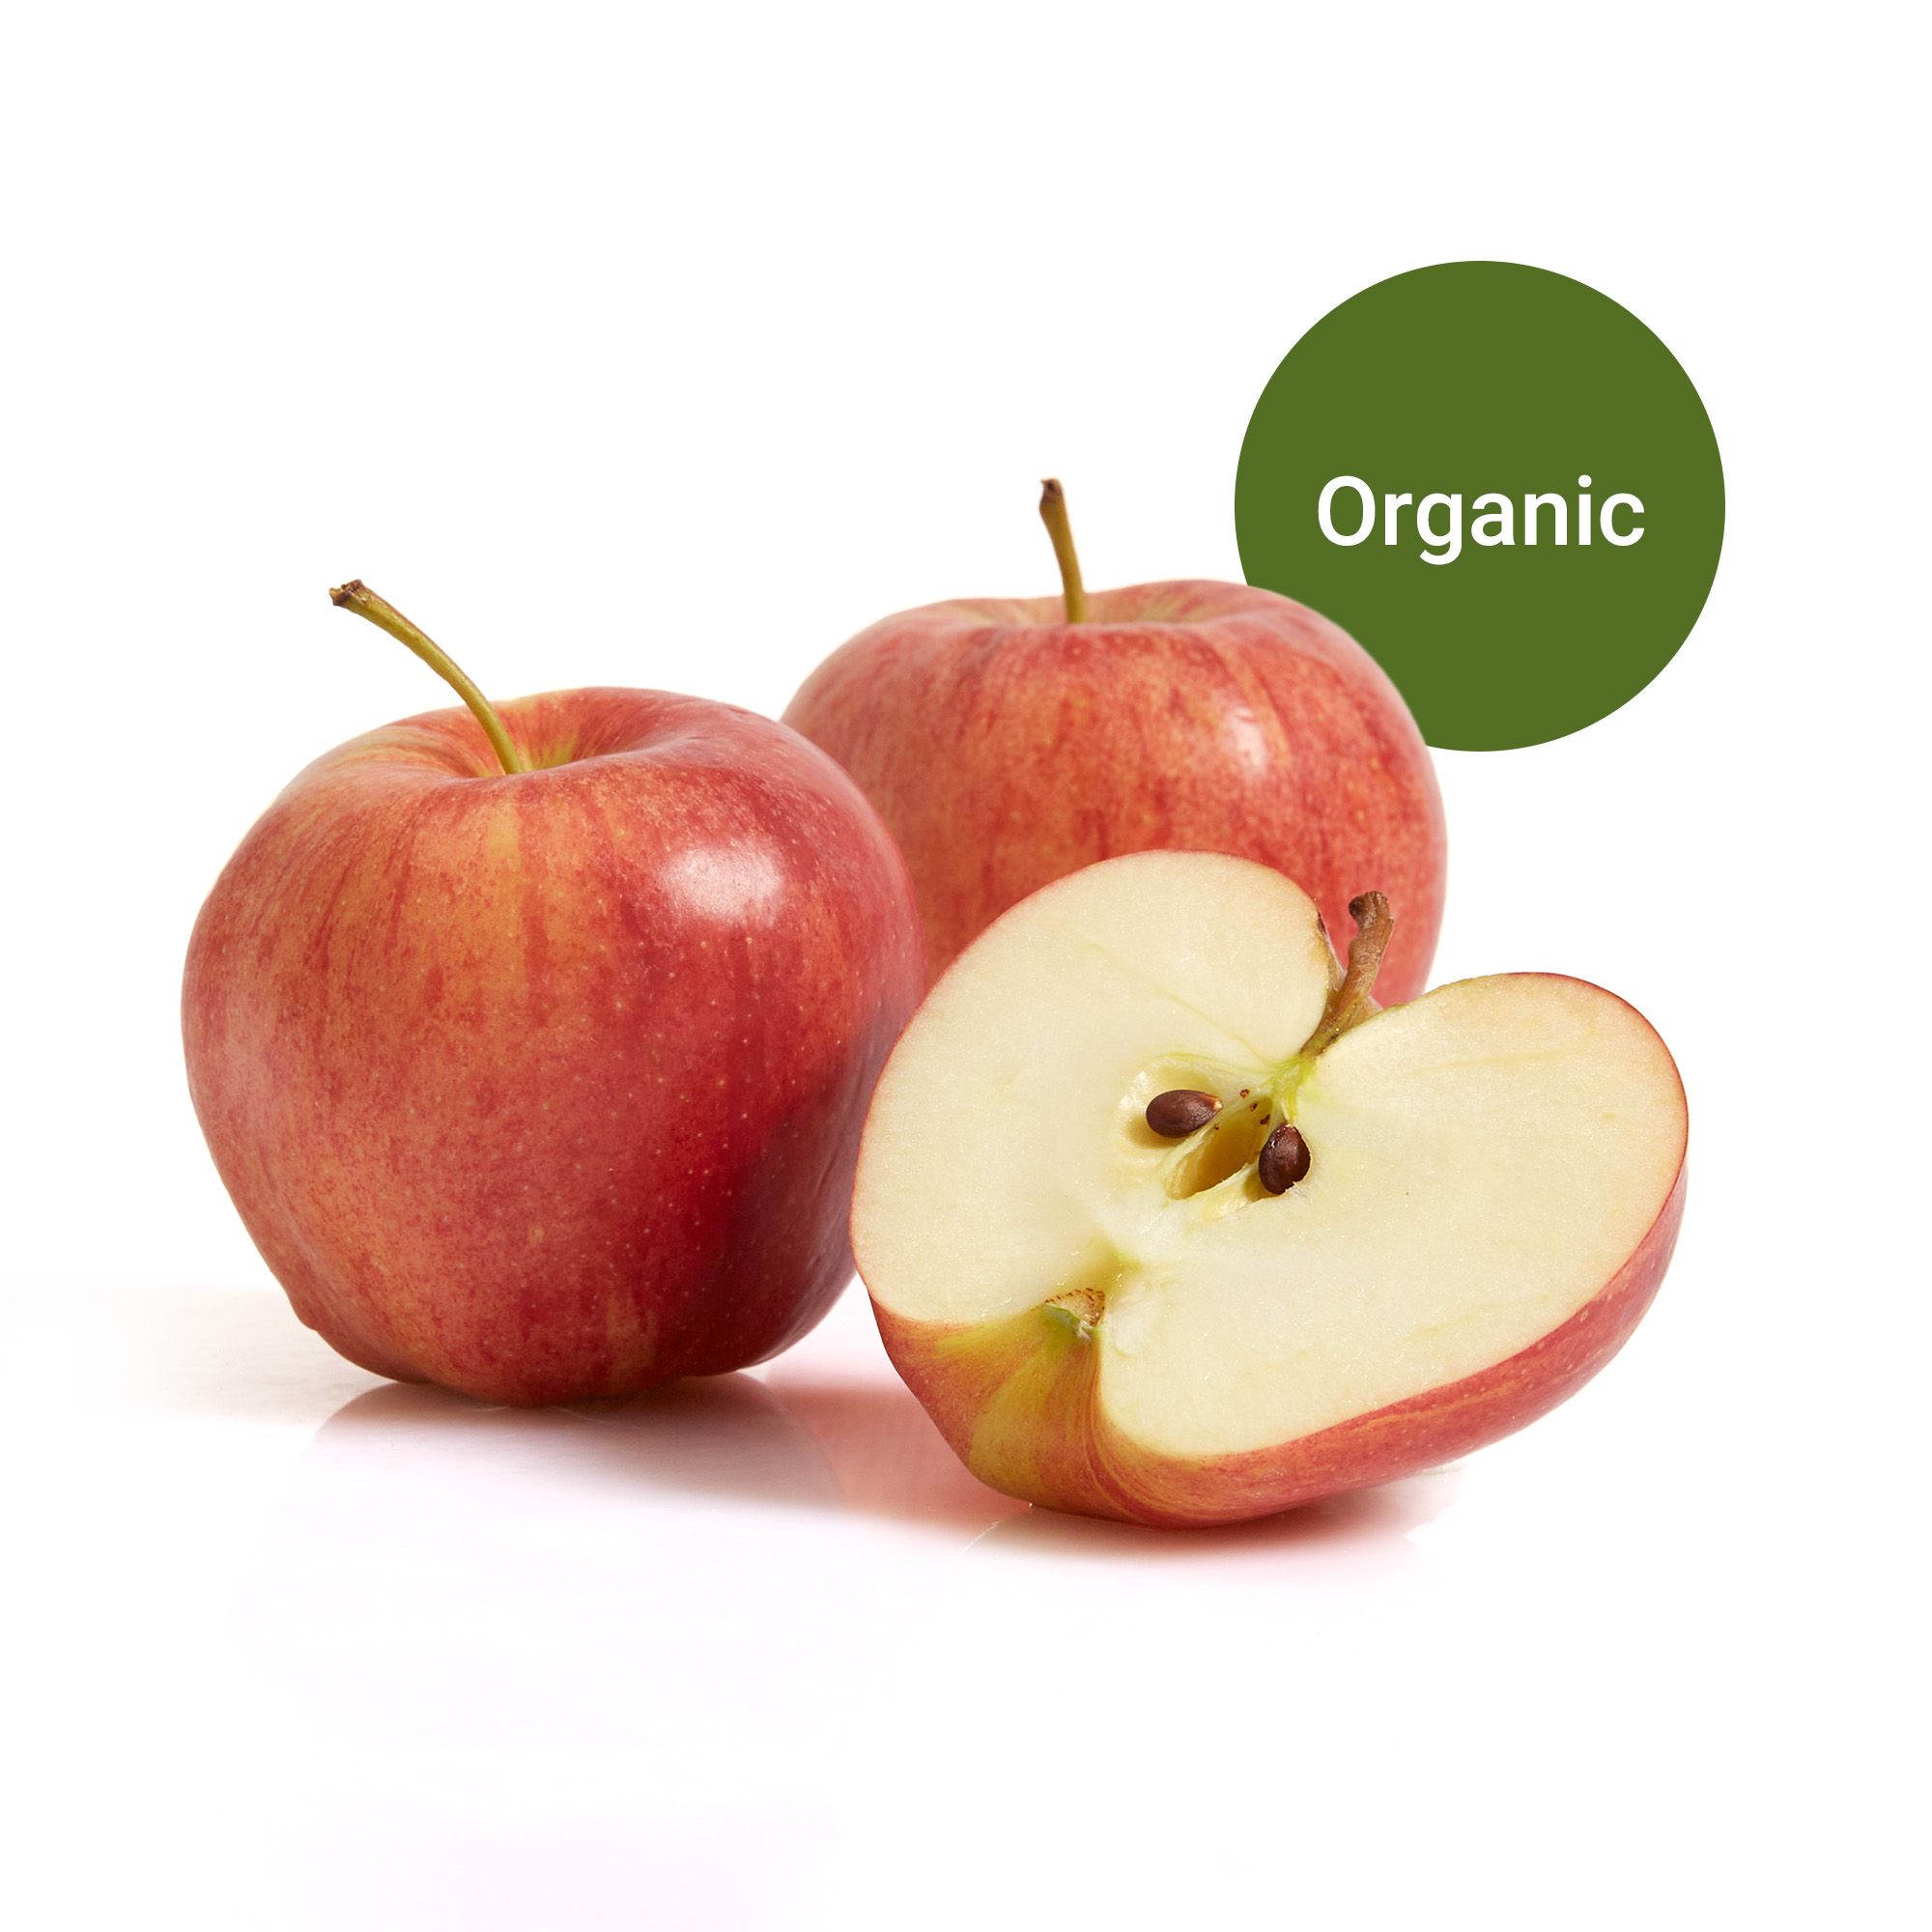 Organic Gala Apples, 4 lbs.